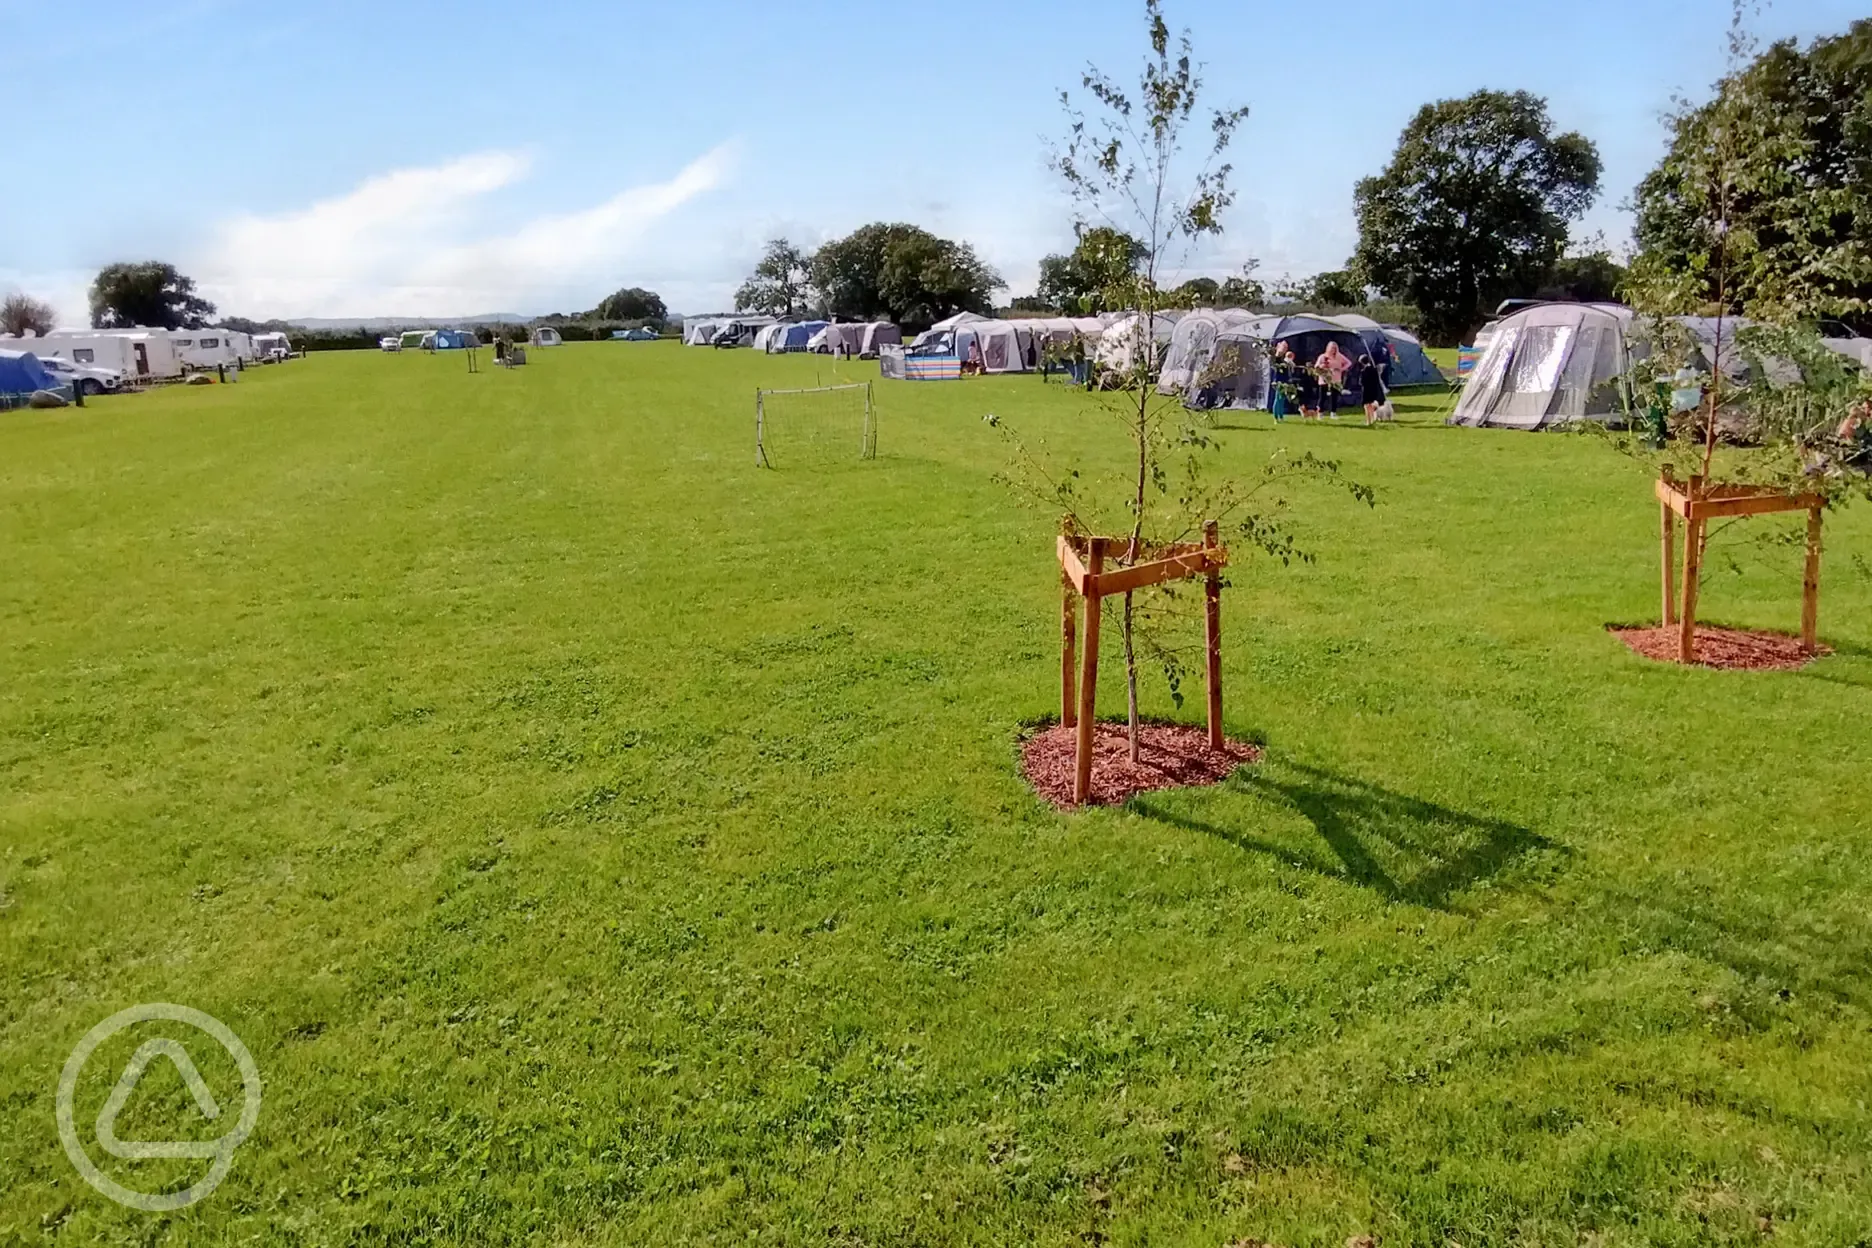 Grass camping field